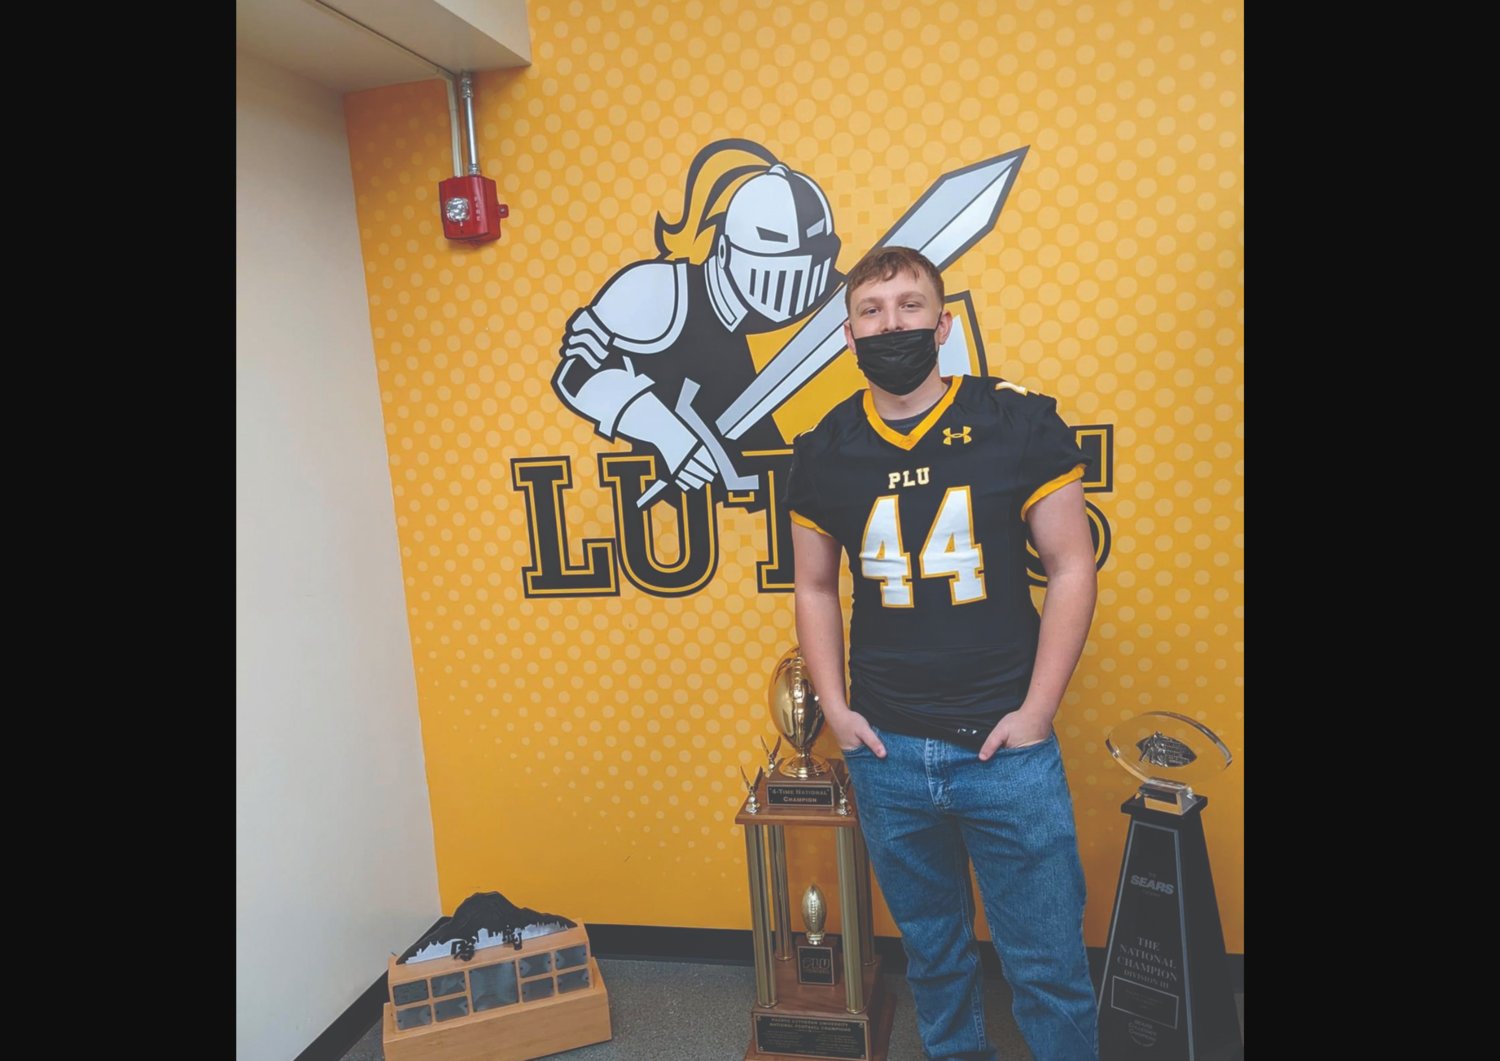 Oakville High School senior Derek Ruymann poses for a photo at Pacific Lutheran University. Ruymann, an all-league linebacker for the Acorns, will join the Lutes’ football team next season.